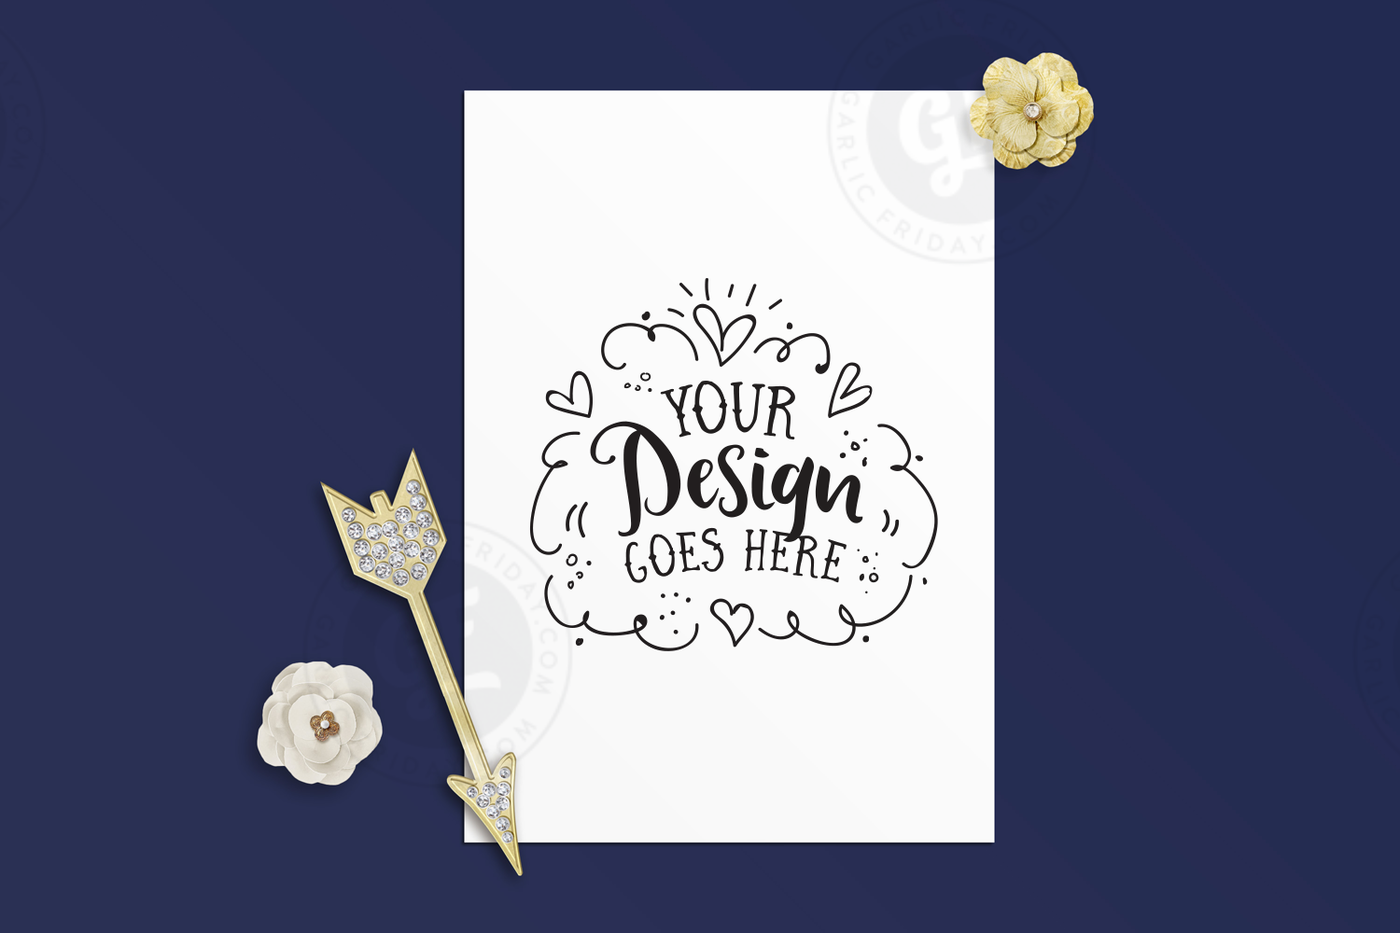 Download A5 Greeting Card Mockup By Garlic Friday Design | TheHungryJPEG.com